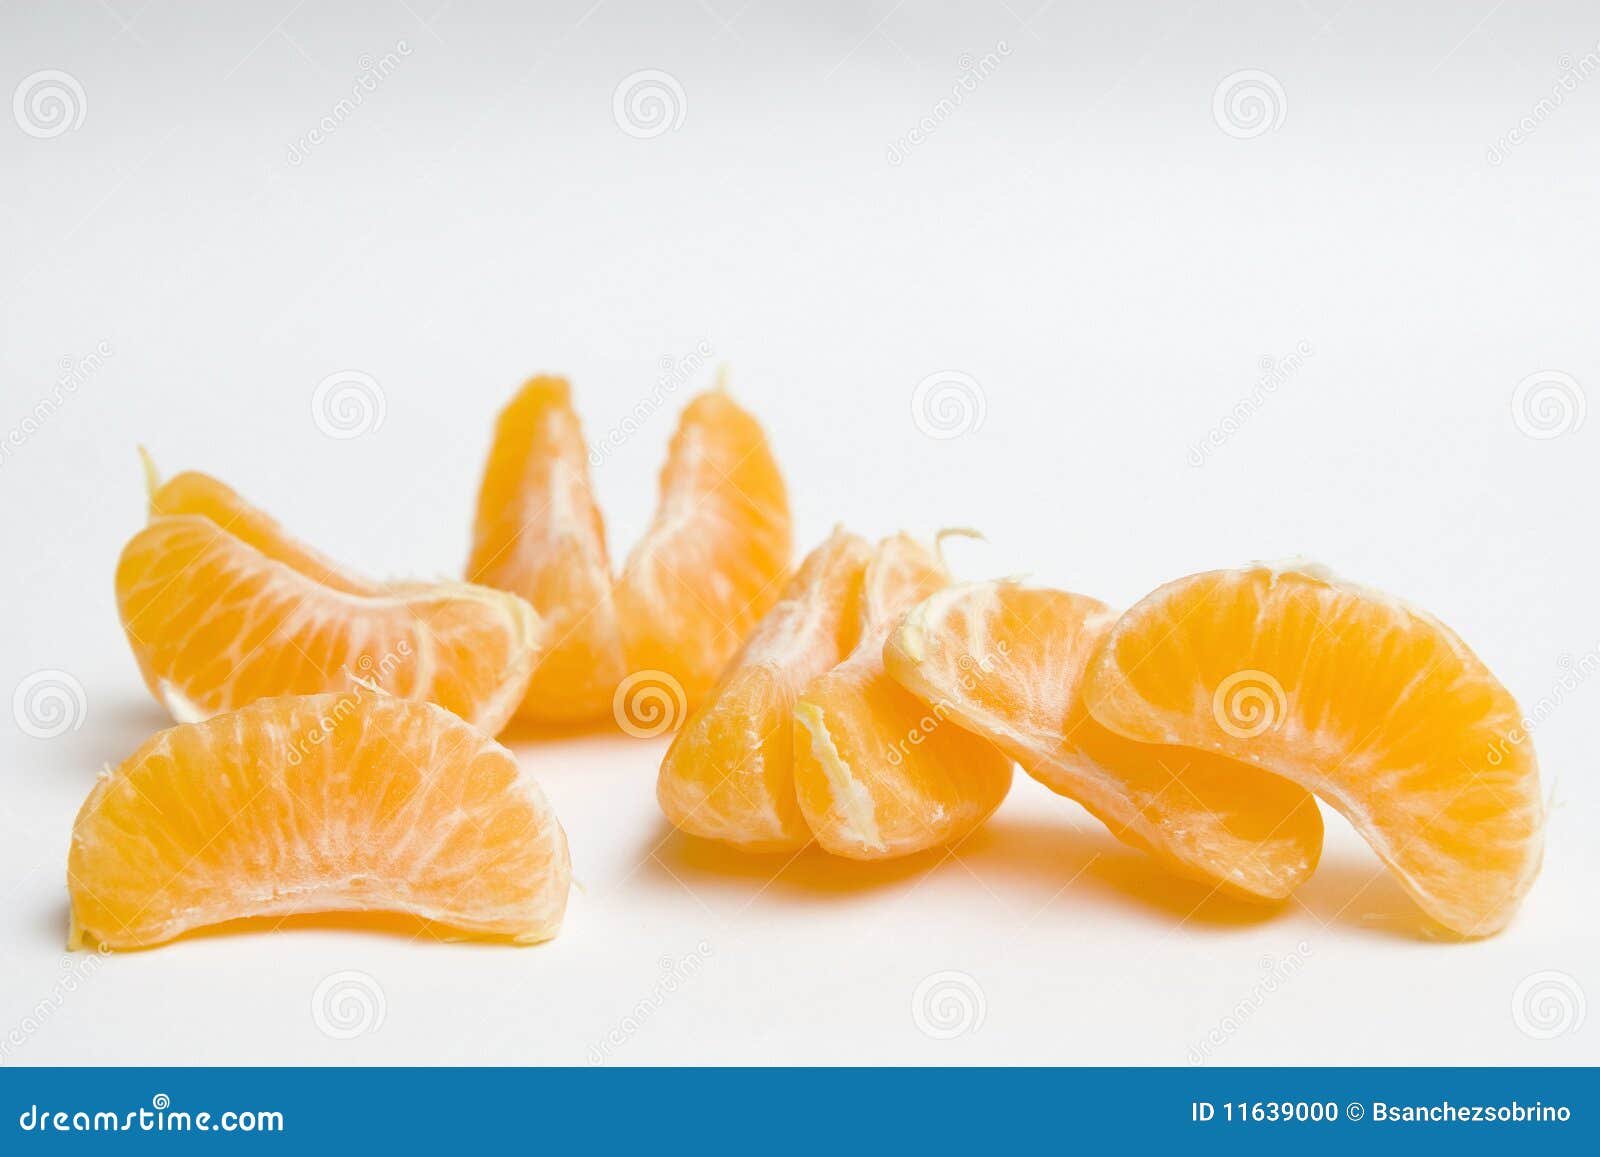 clementine wedges